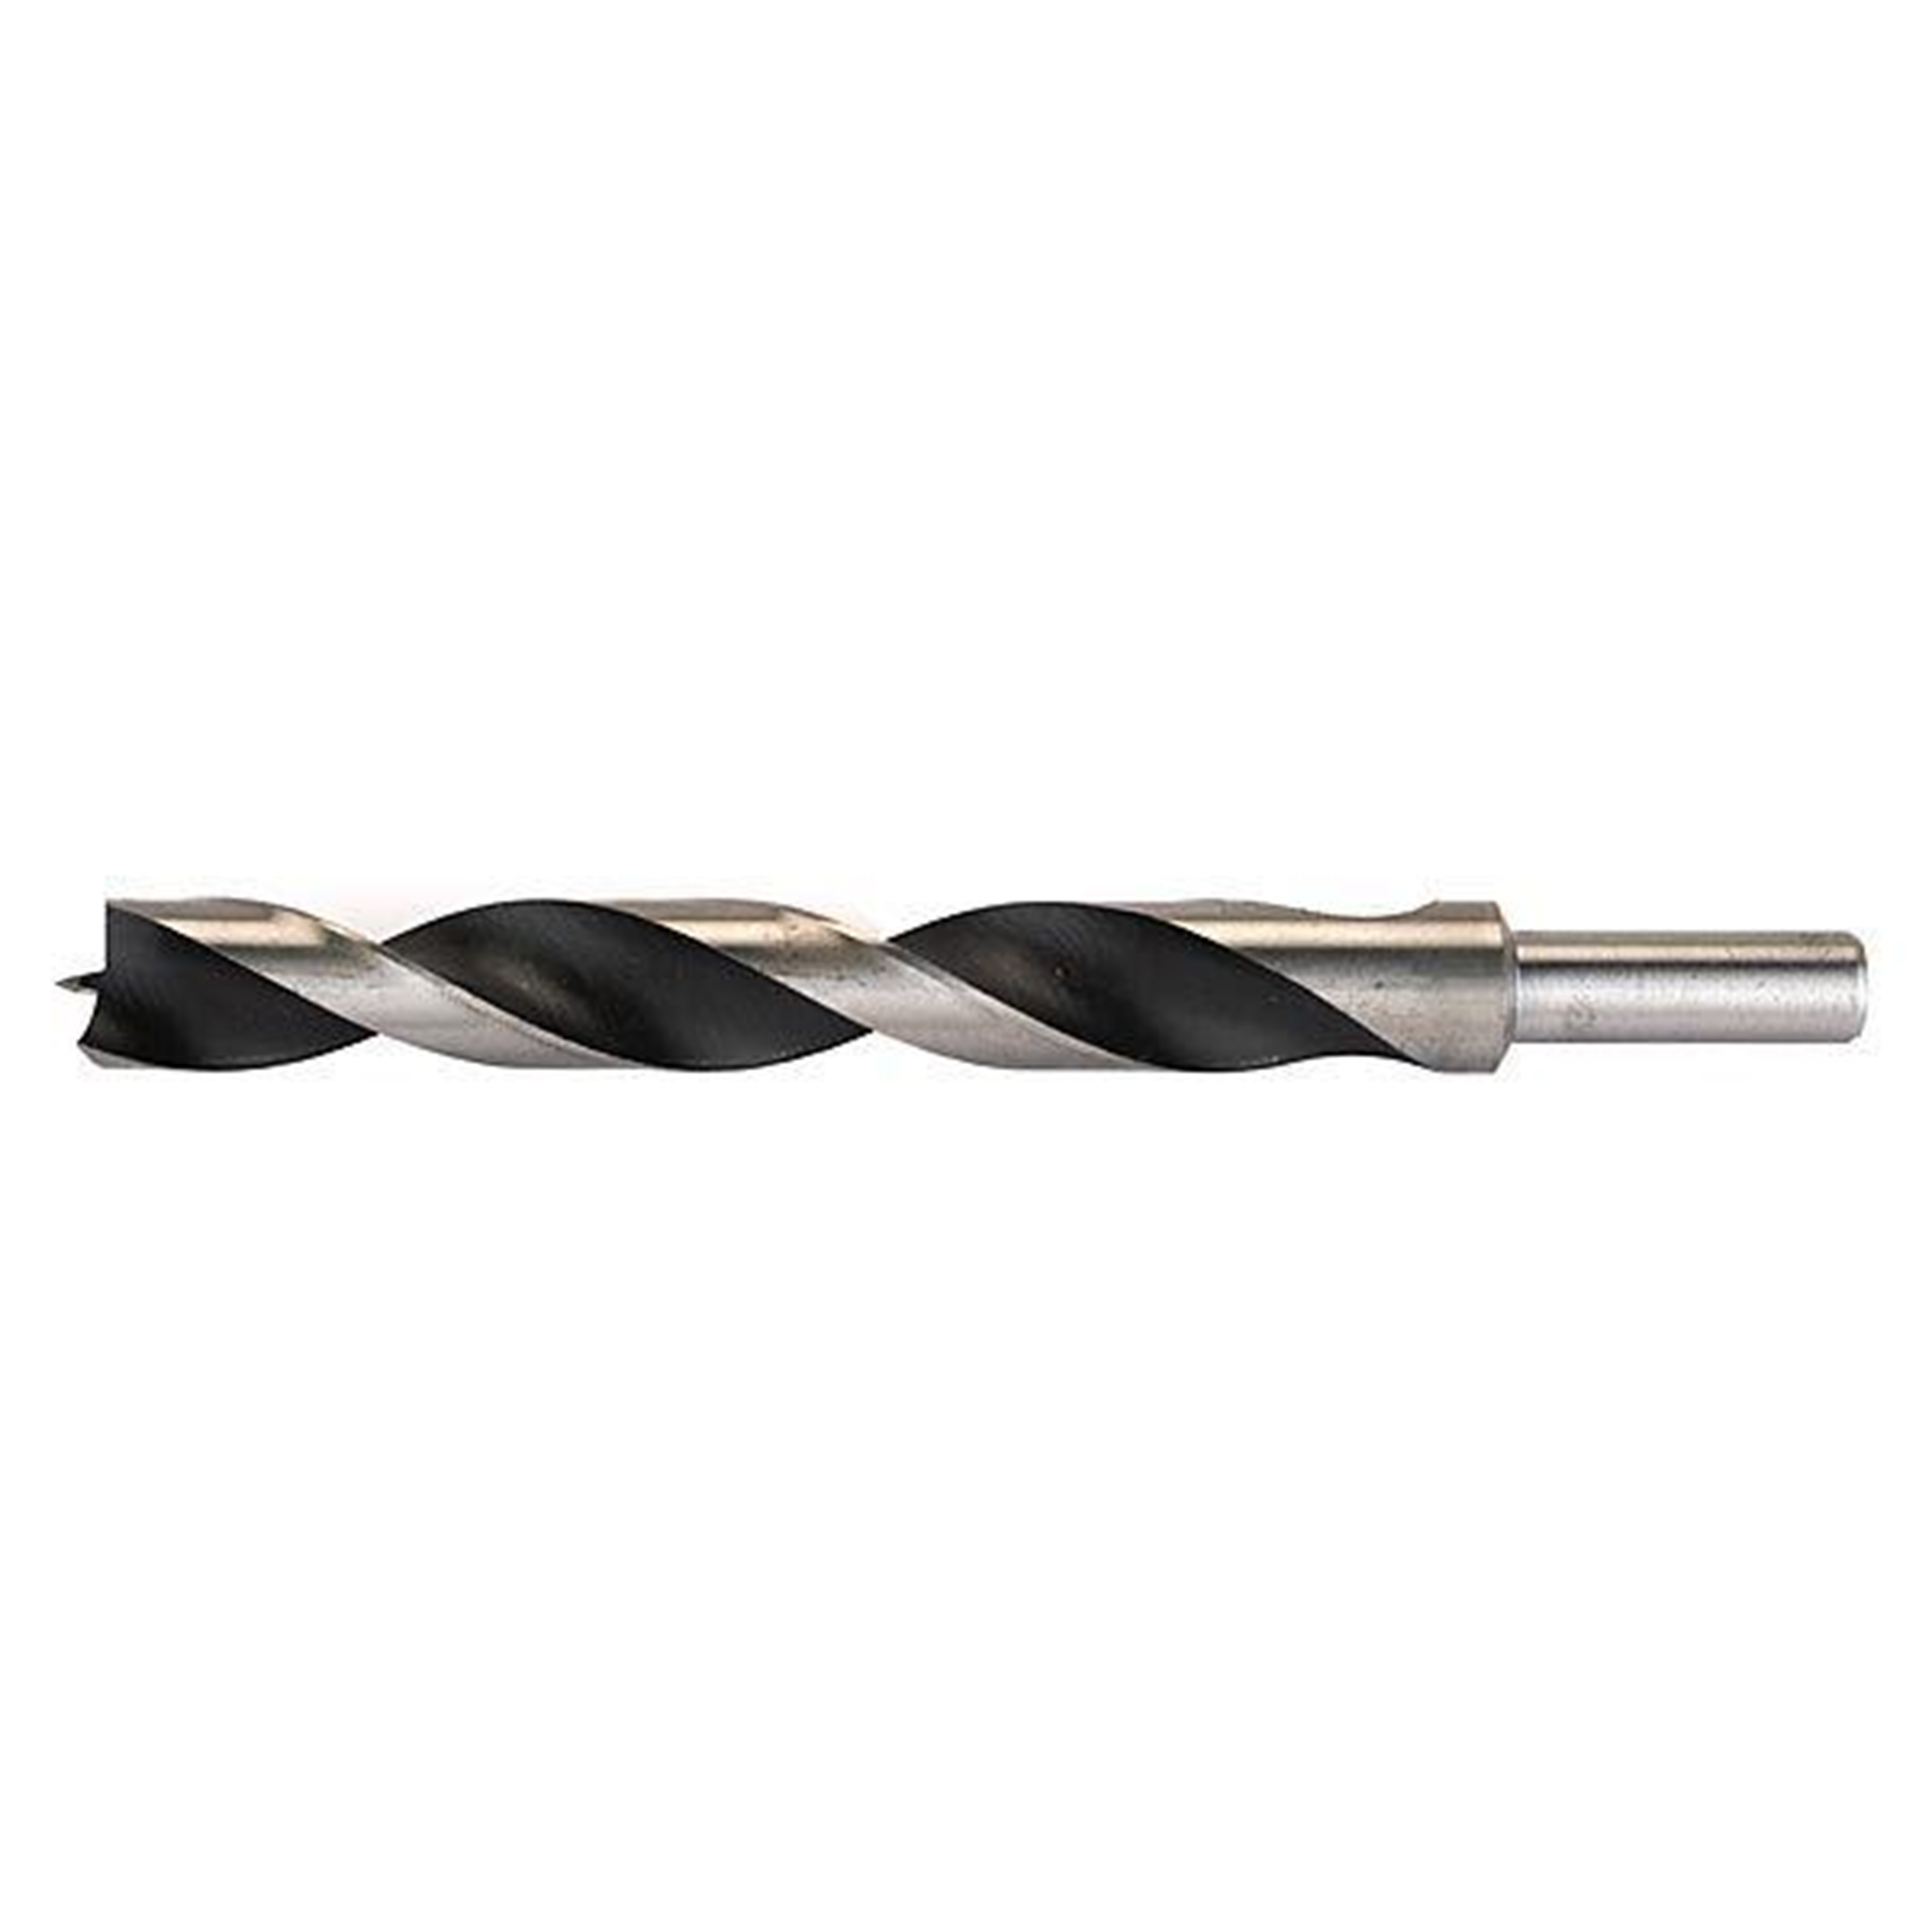 20mm Chrome-vanadium Steel Brad Point Drill Bit